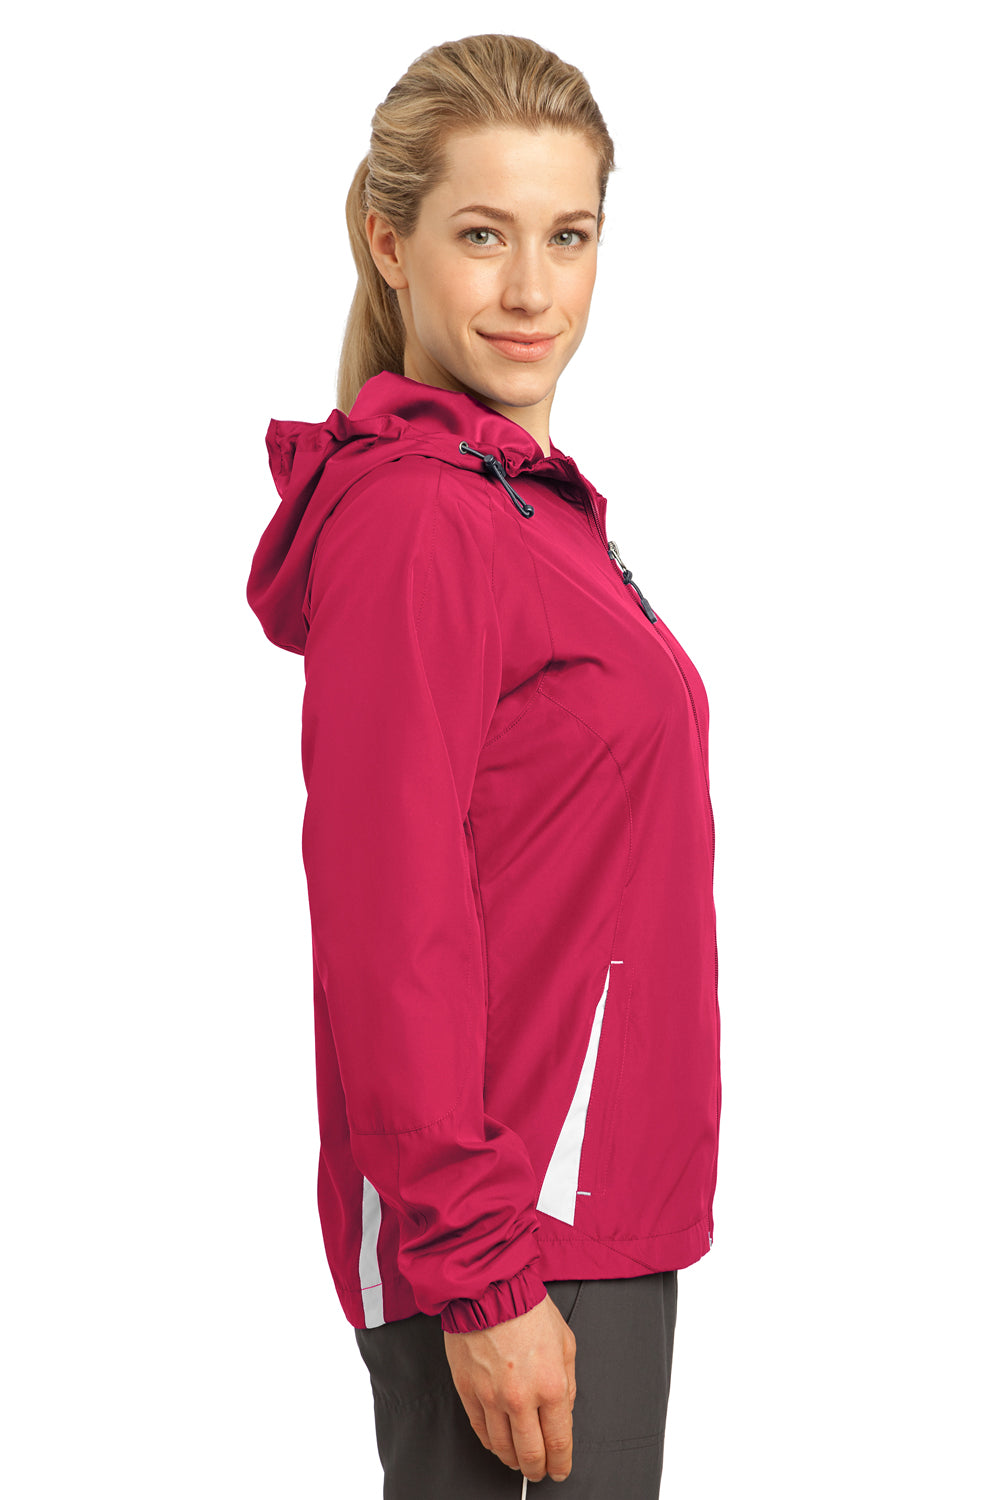 Sport-Tek LST76 Womens Water Resistant Full Zip Hooded Jacket Fuchsia Pink Side